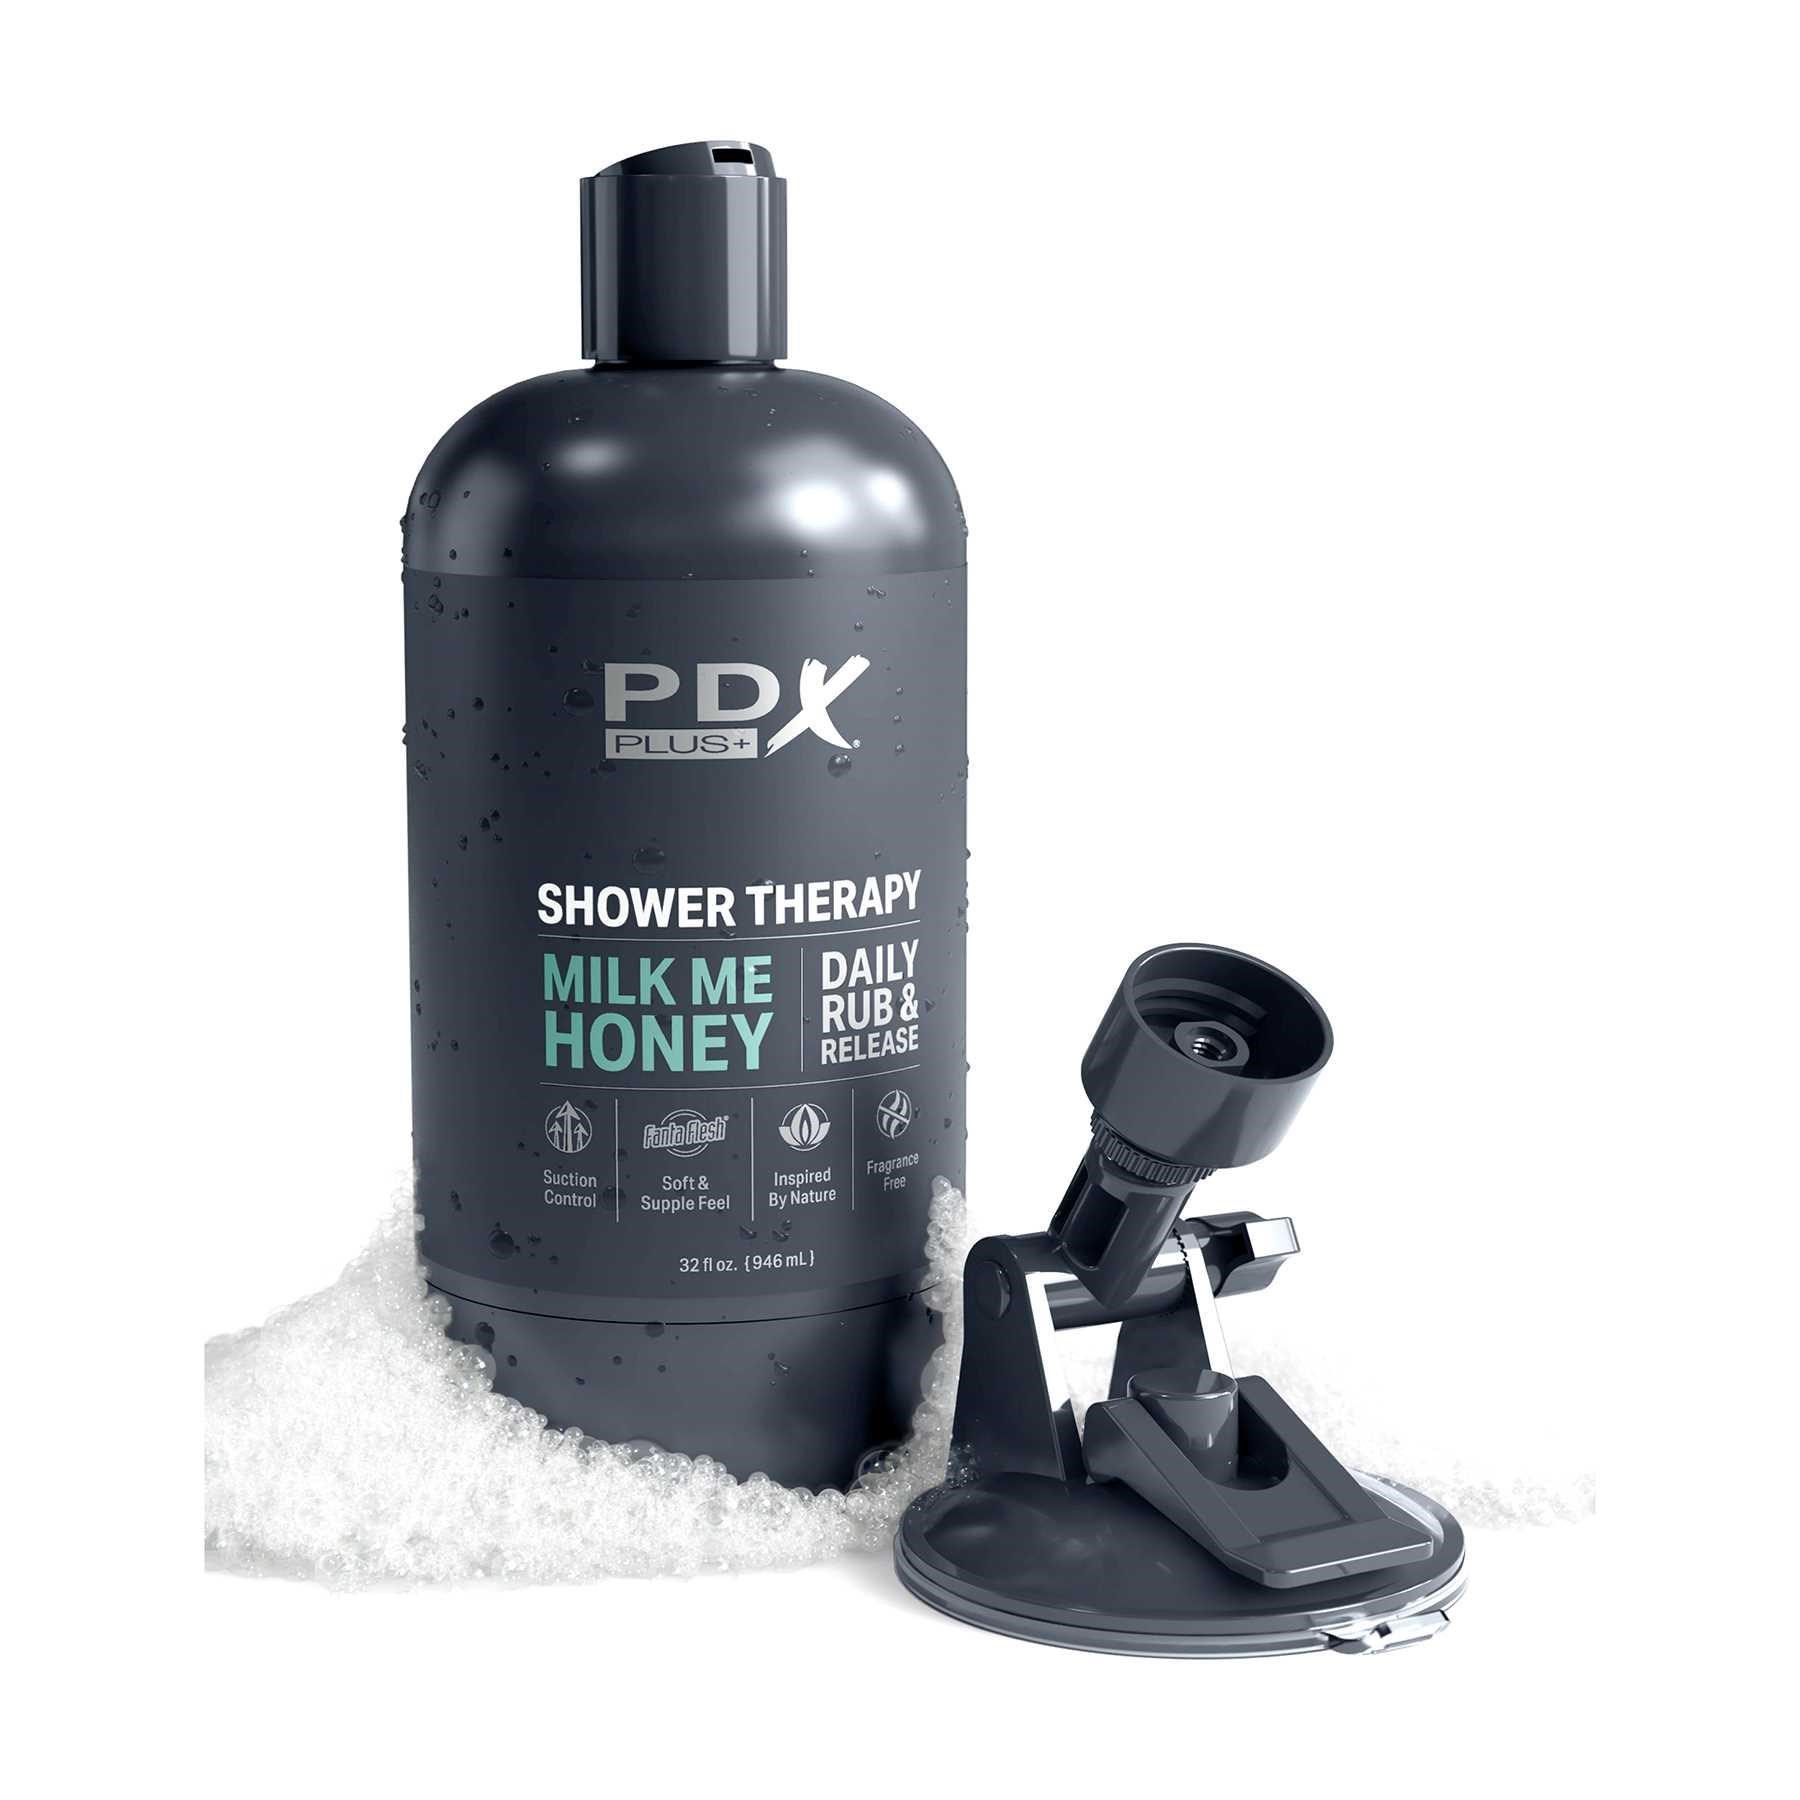 PDX Plus Shower Therapy Milk Me Honey Discreet Stroker male masturbator